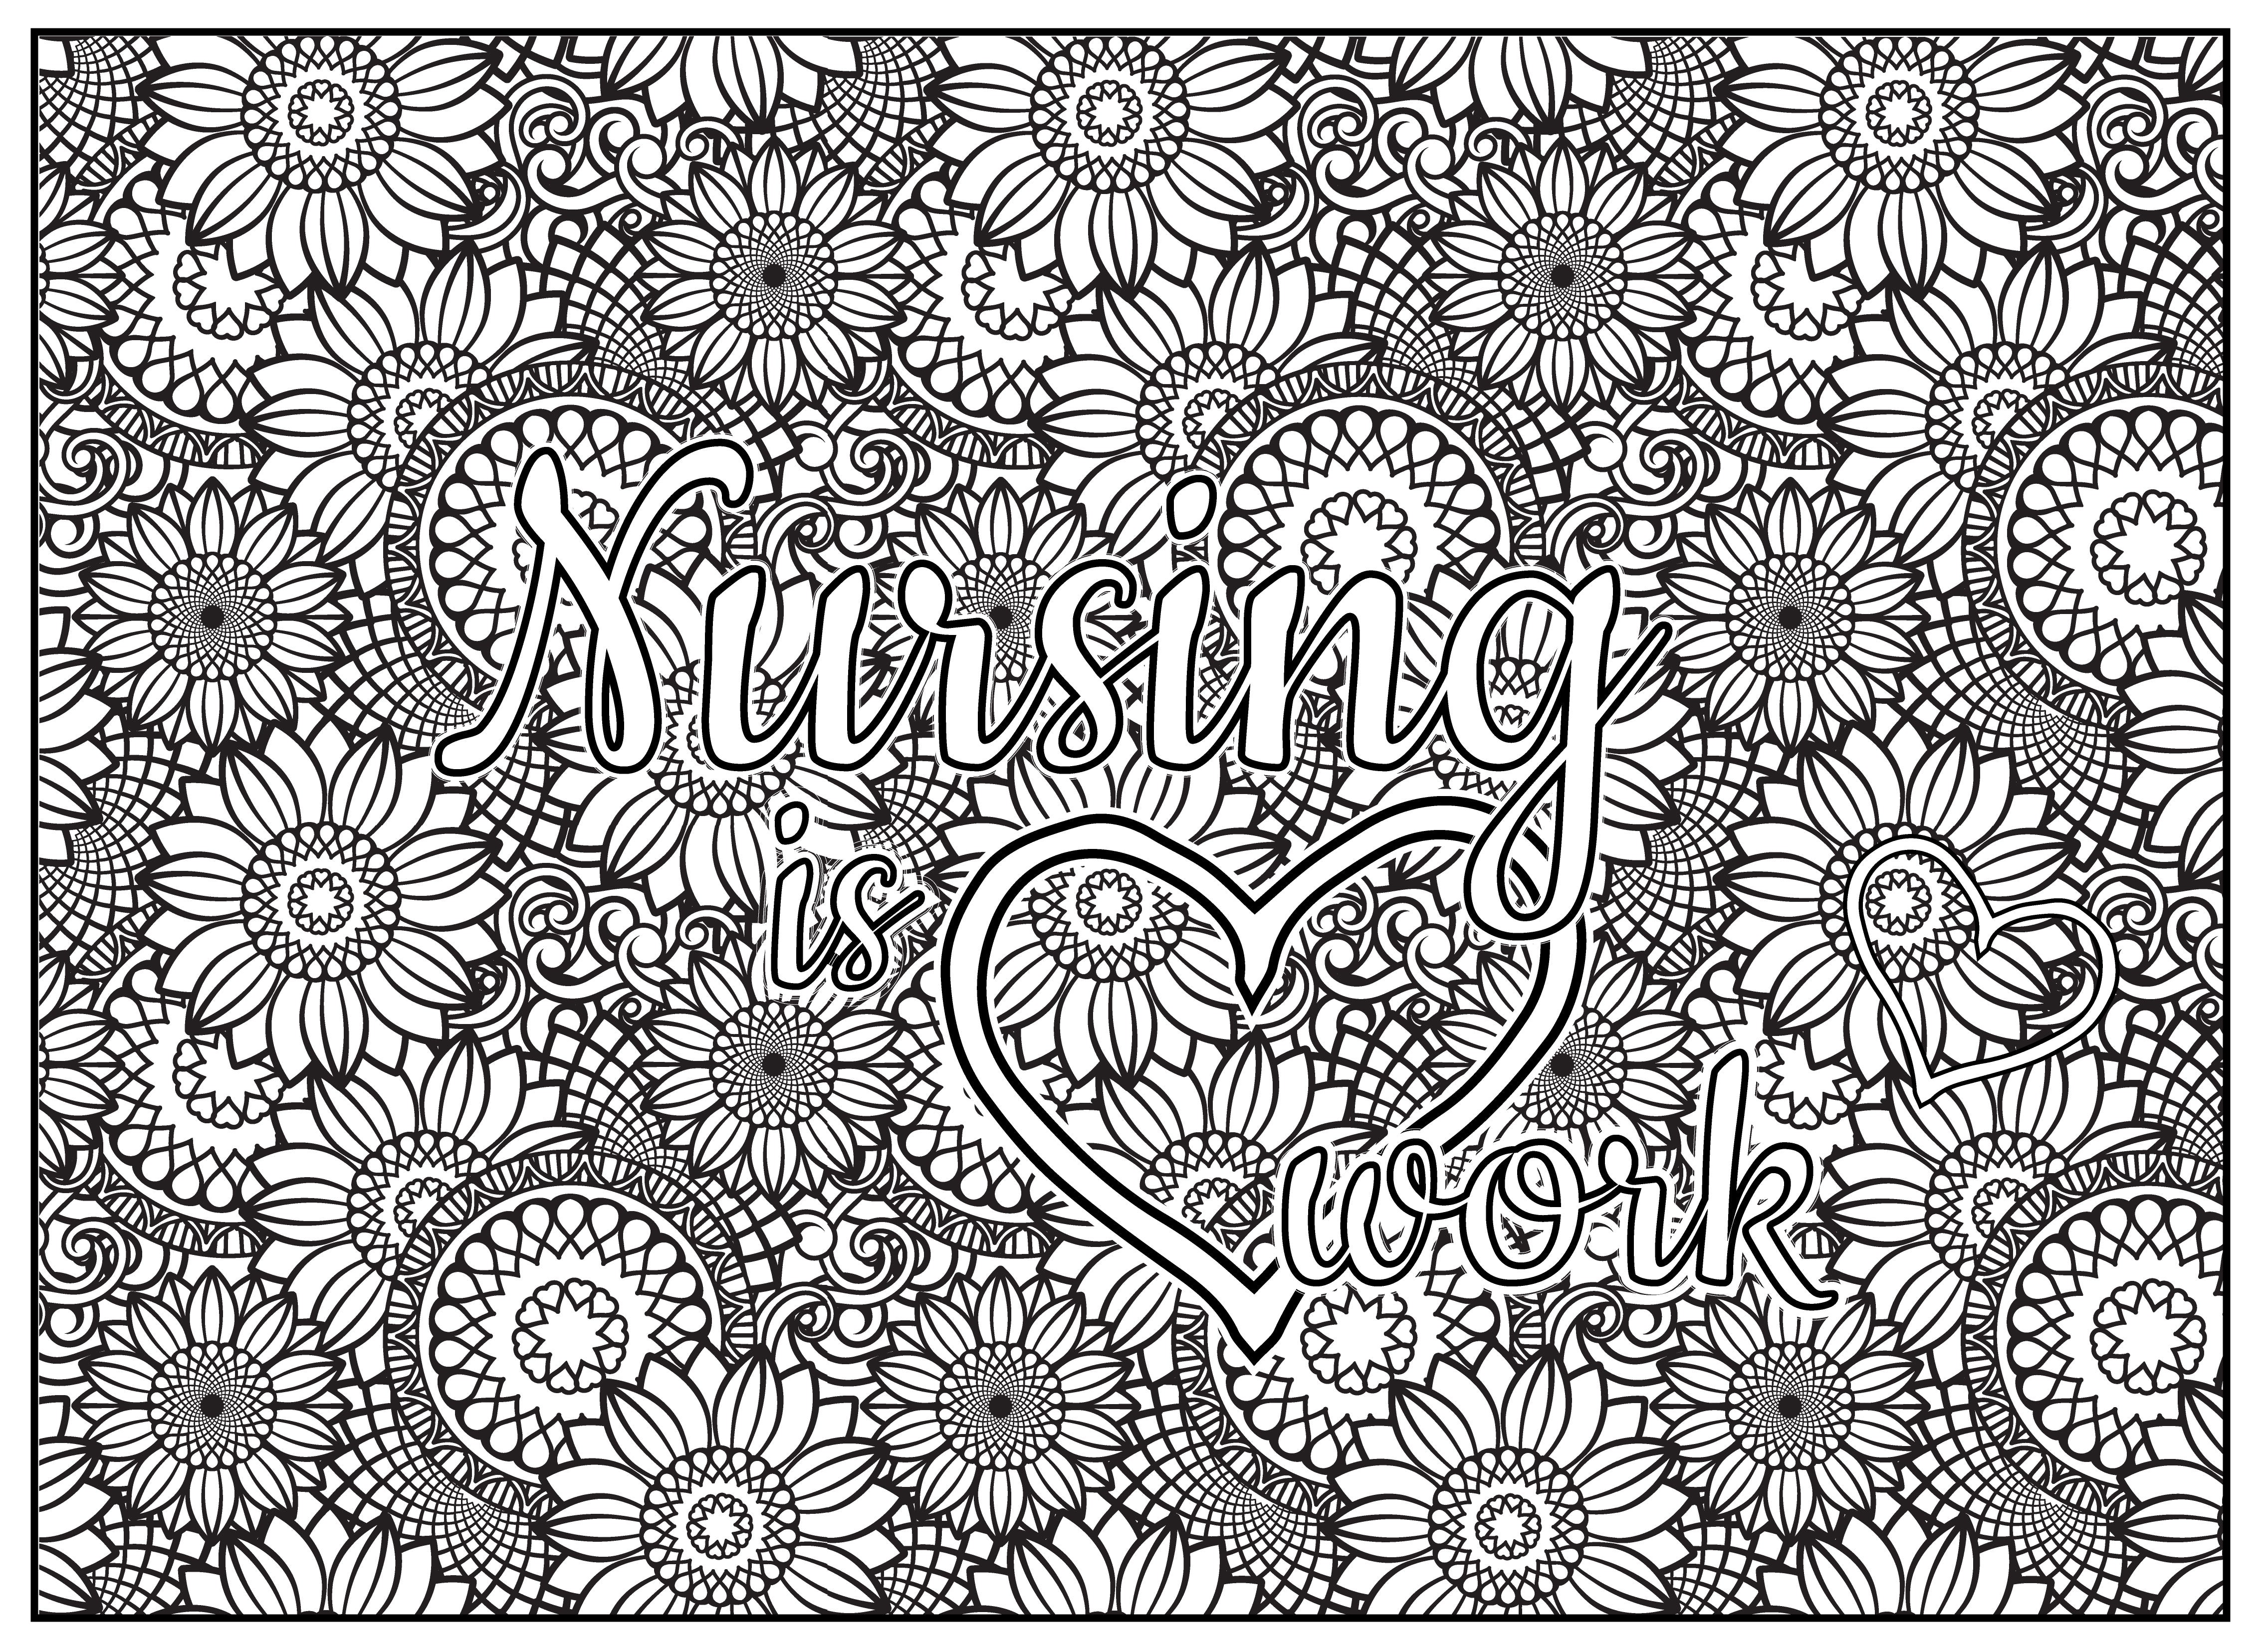 Nursing is heart work personalized giant coloring poster x â debbie lynn